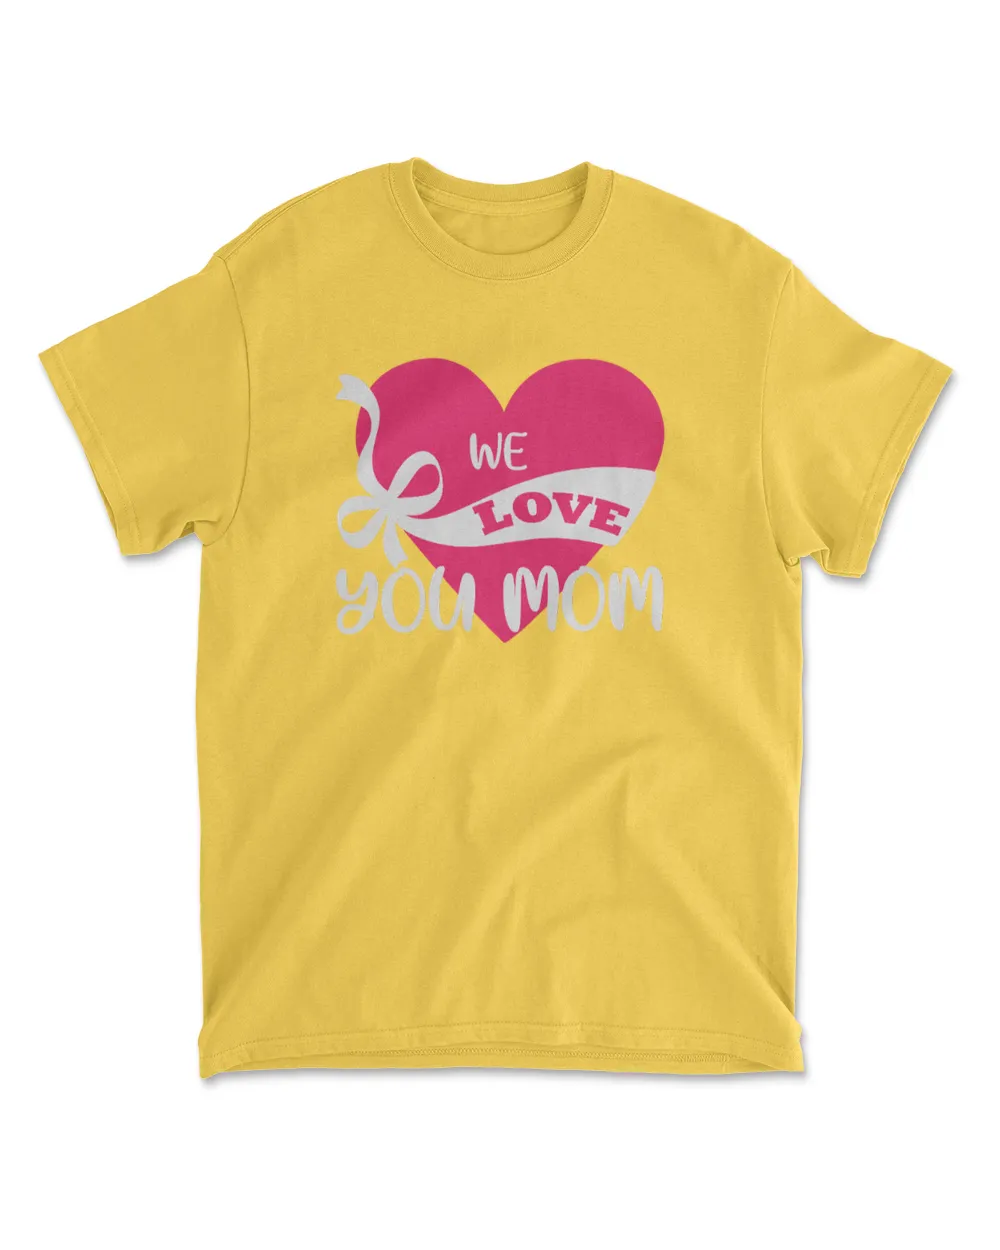 We love you mom tee t shirt